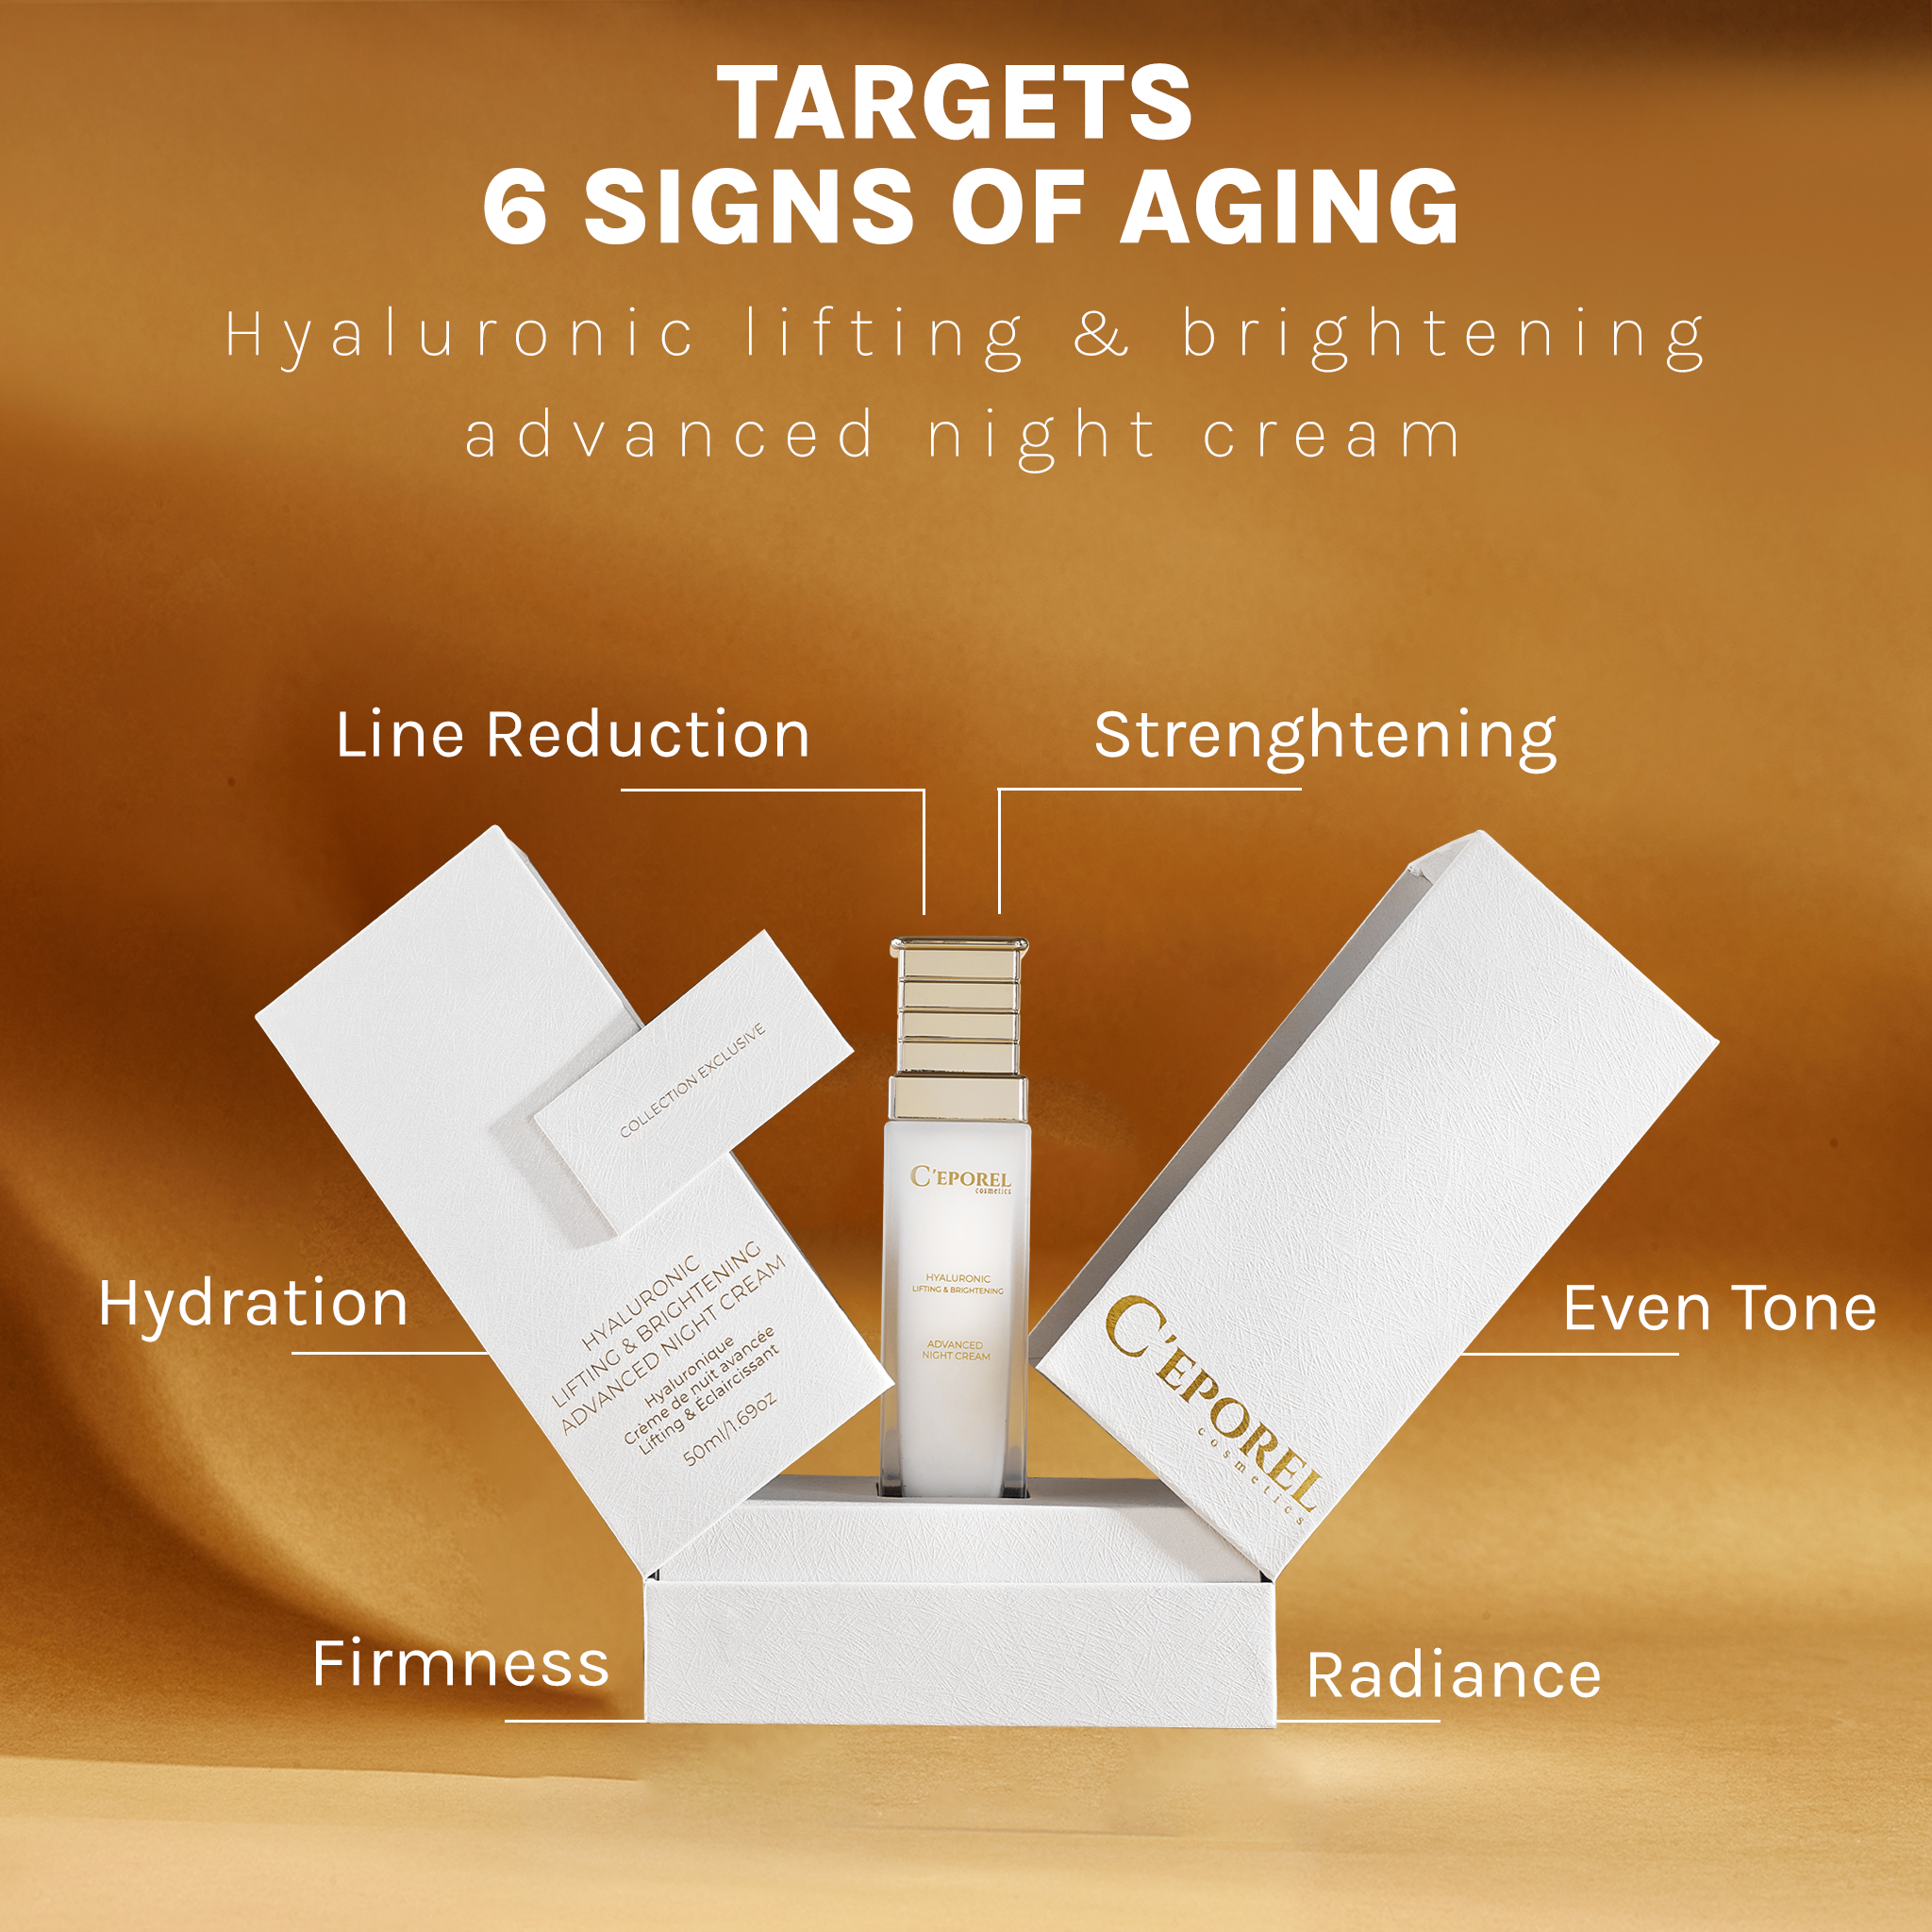 Hyaluronic Lifting & Brightening Advanced Night Cream